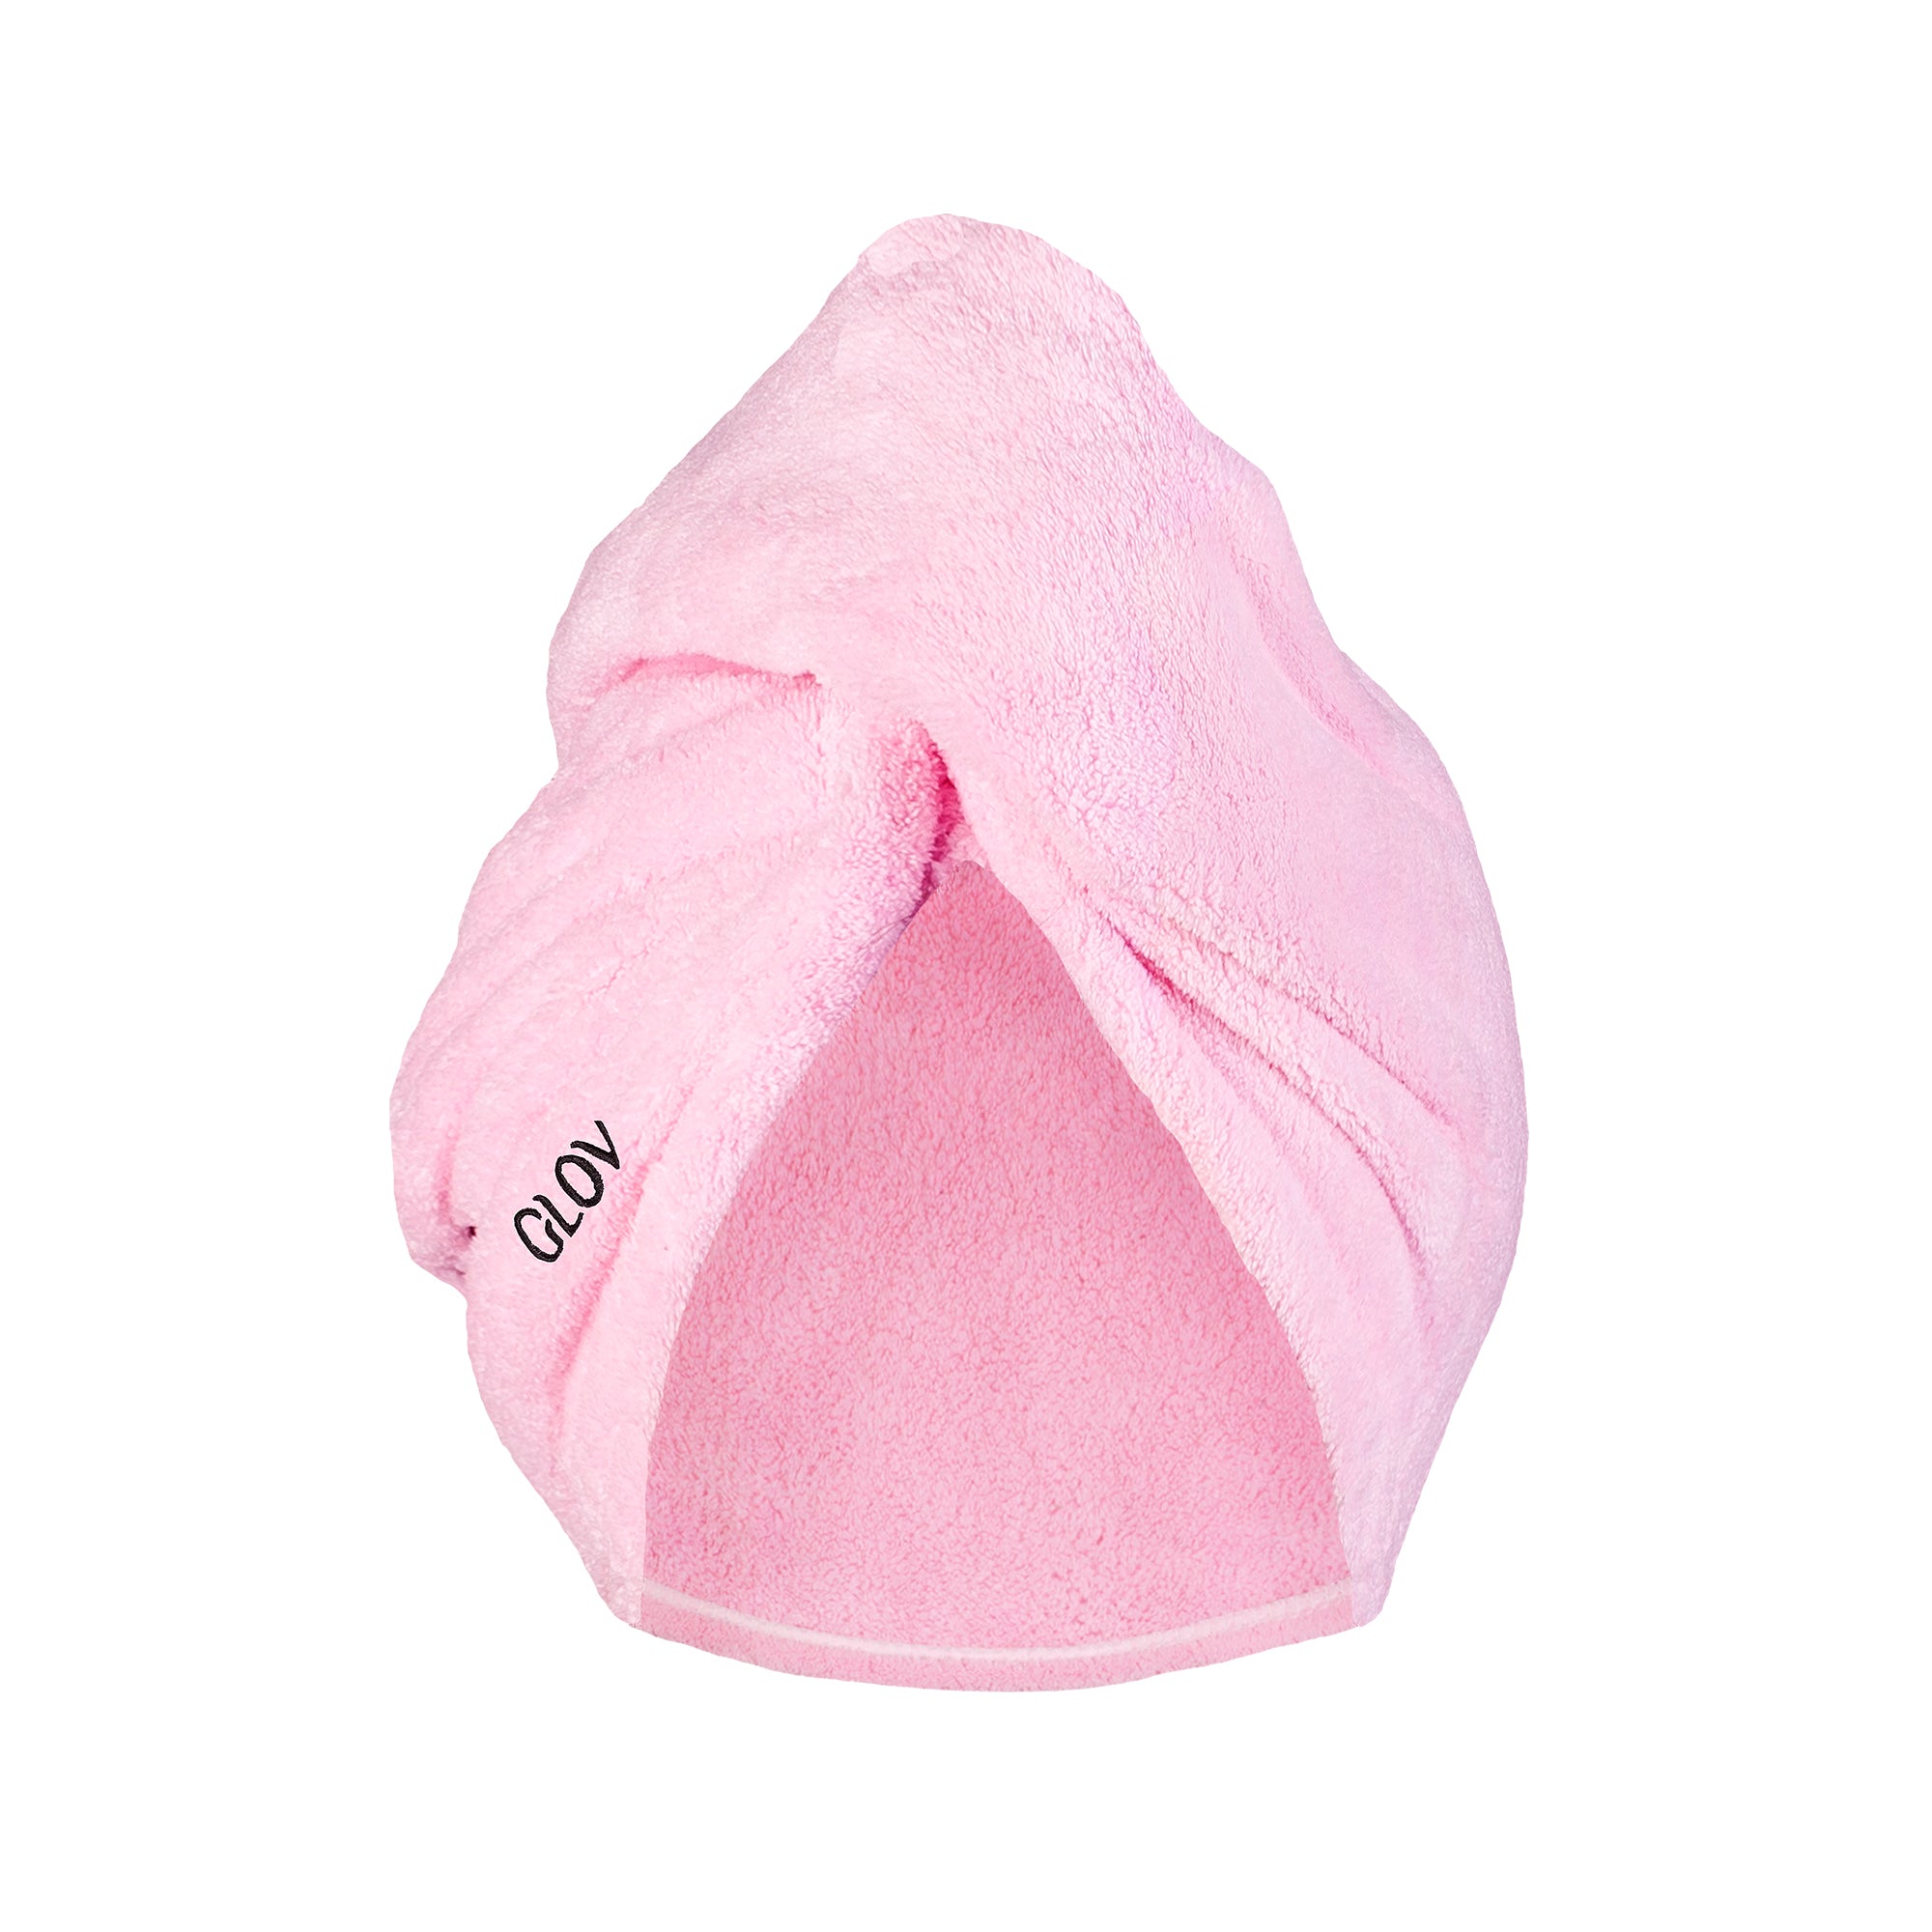 06. GLOV Hair Wrap Soft Pink